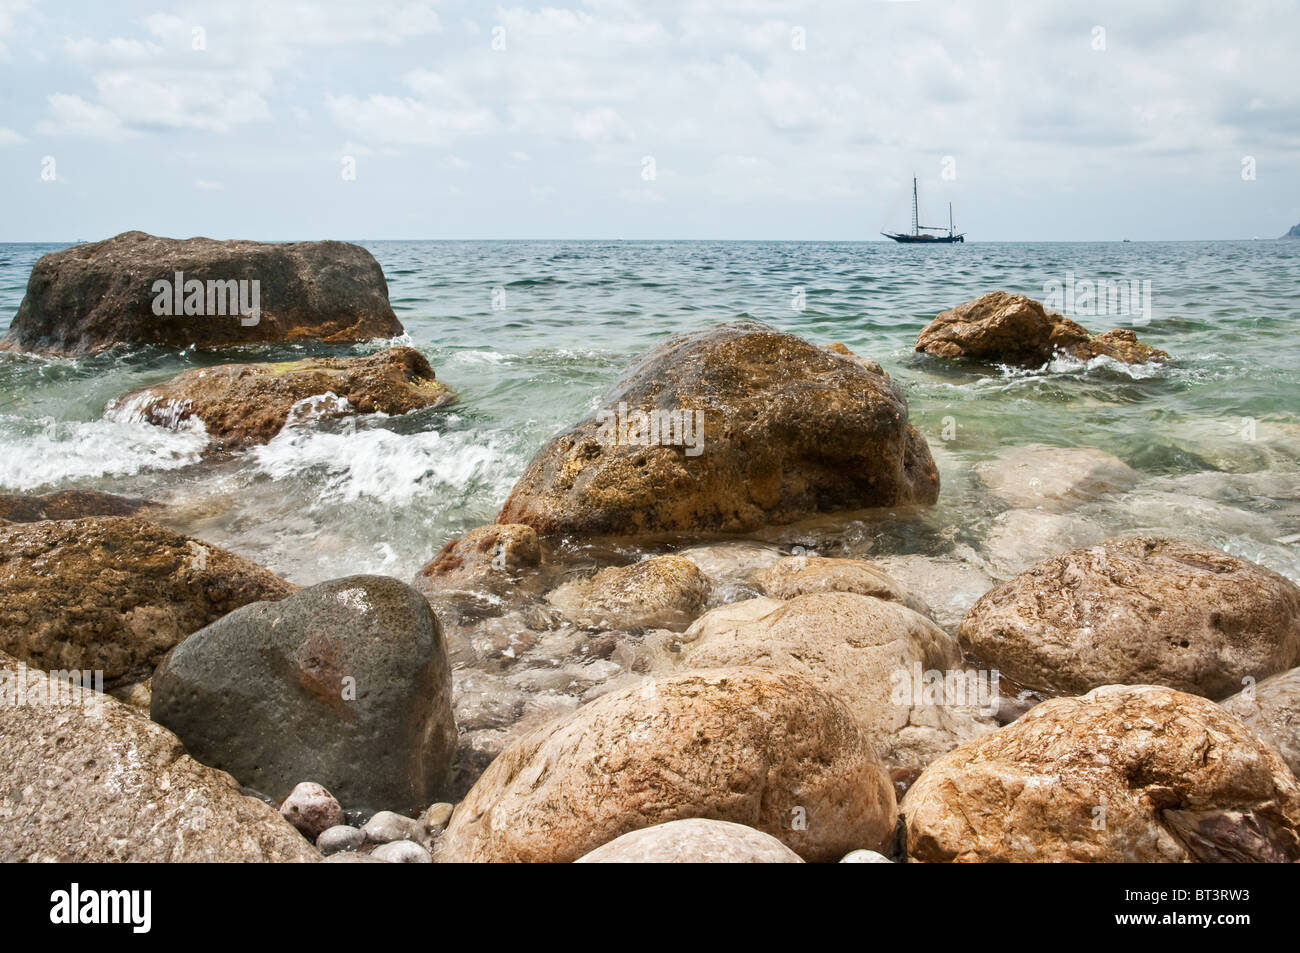 big stones on tranquil sea Stock Photo